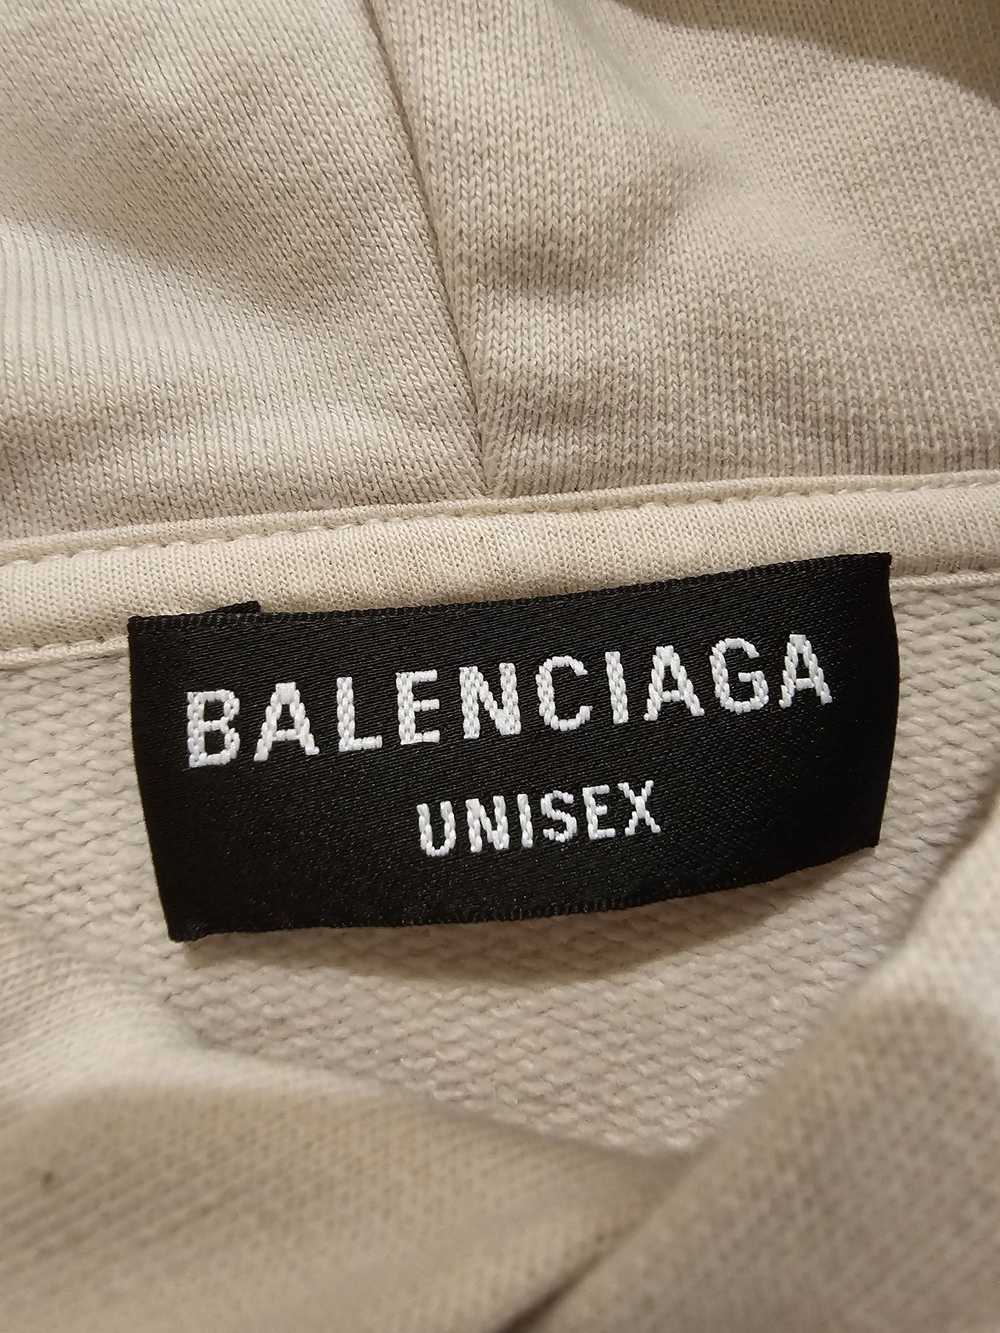 Balenciaga Worldwide Retail Therapy - image 2